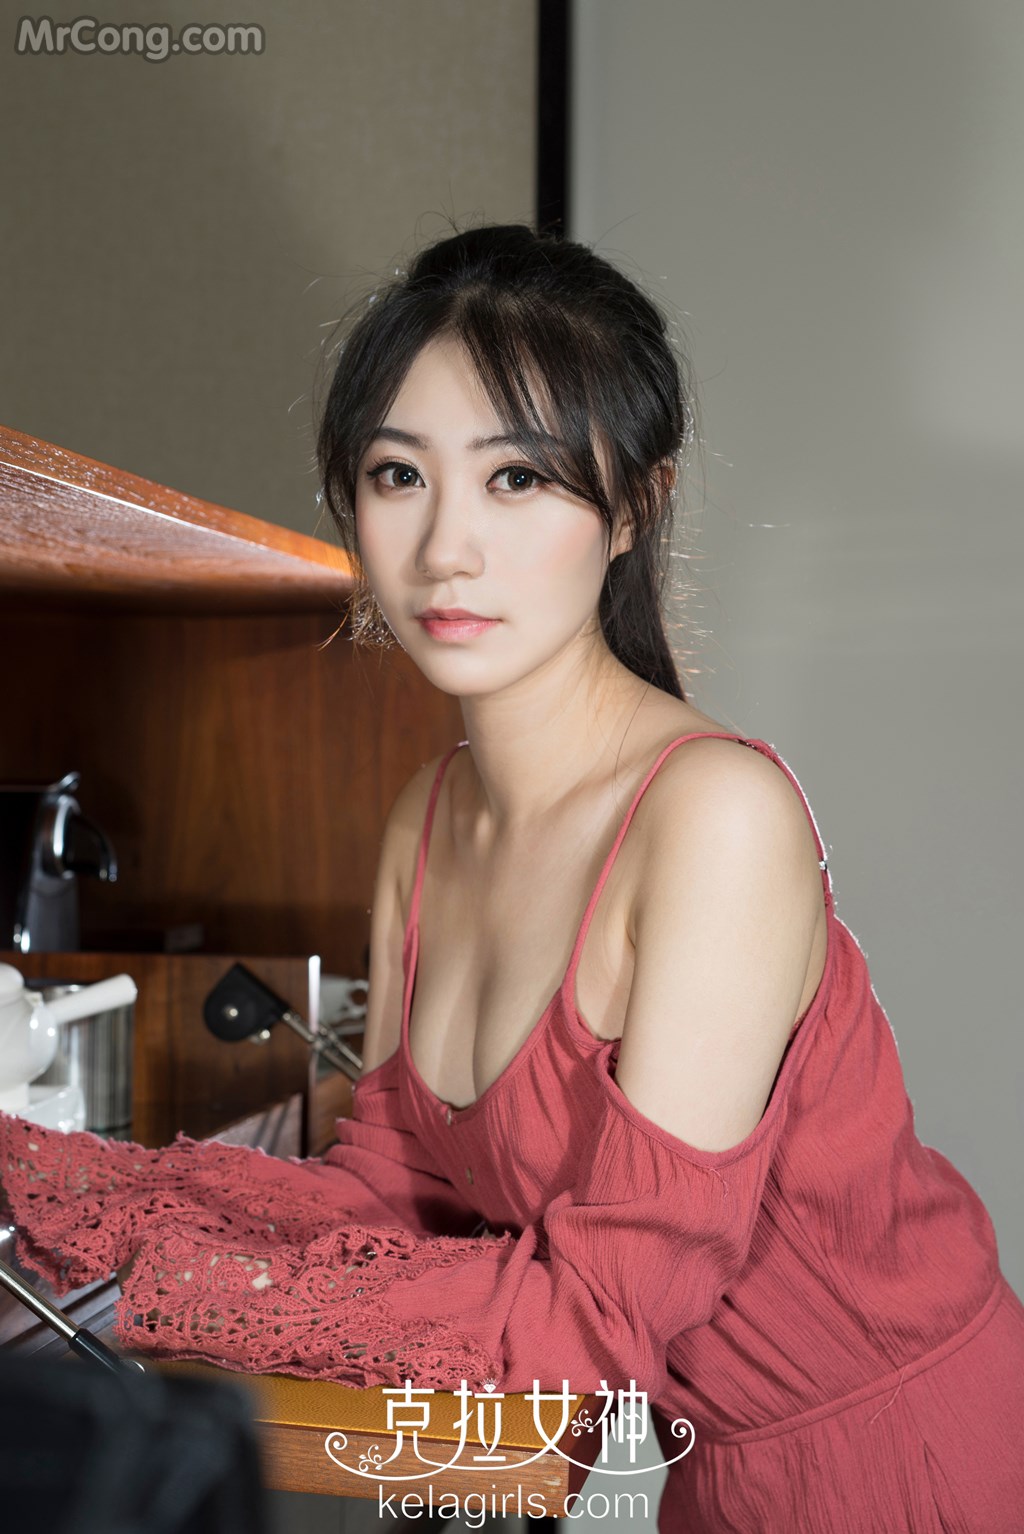 KelaGirls 2017-03-24: Model Xiao Lu (小鹿) (30 photos)